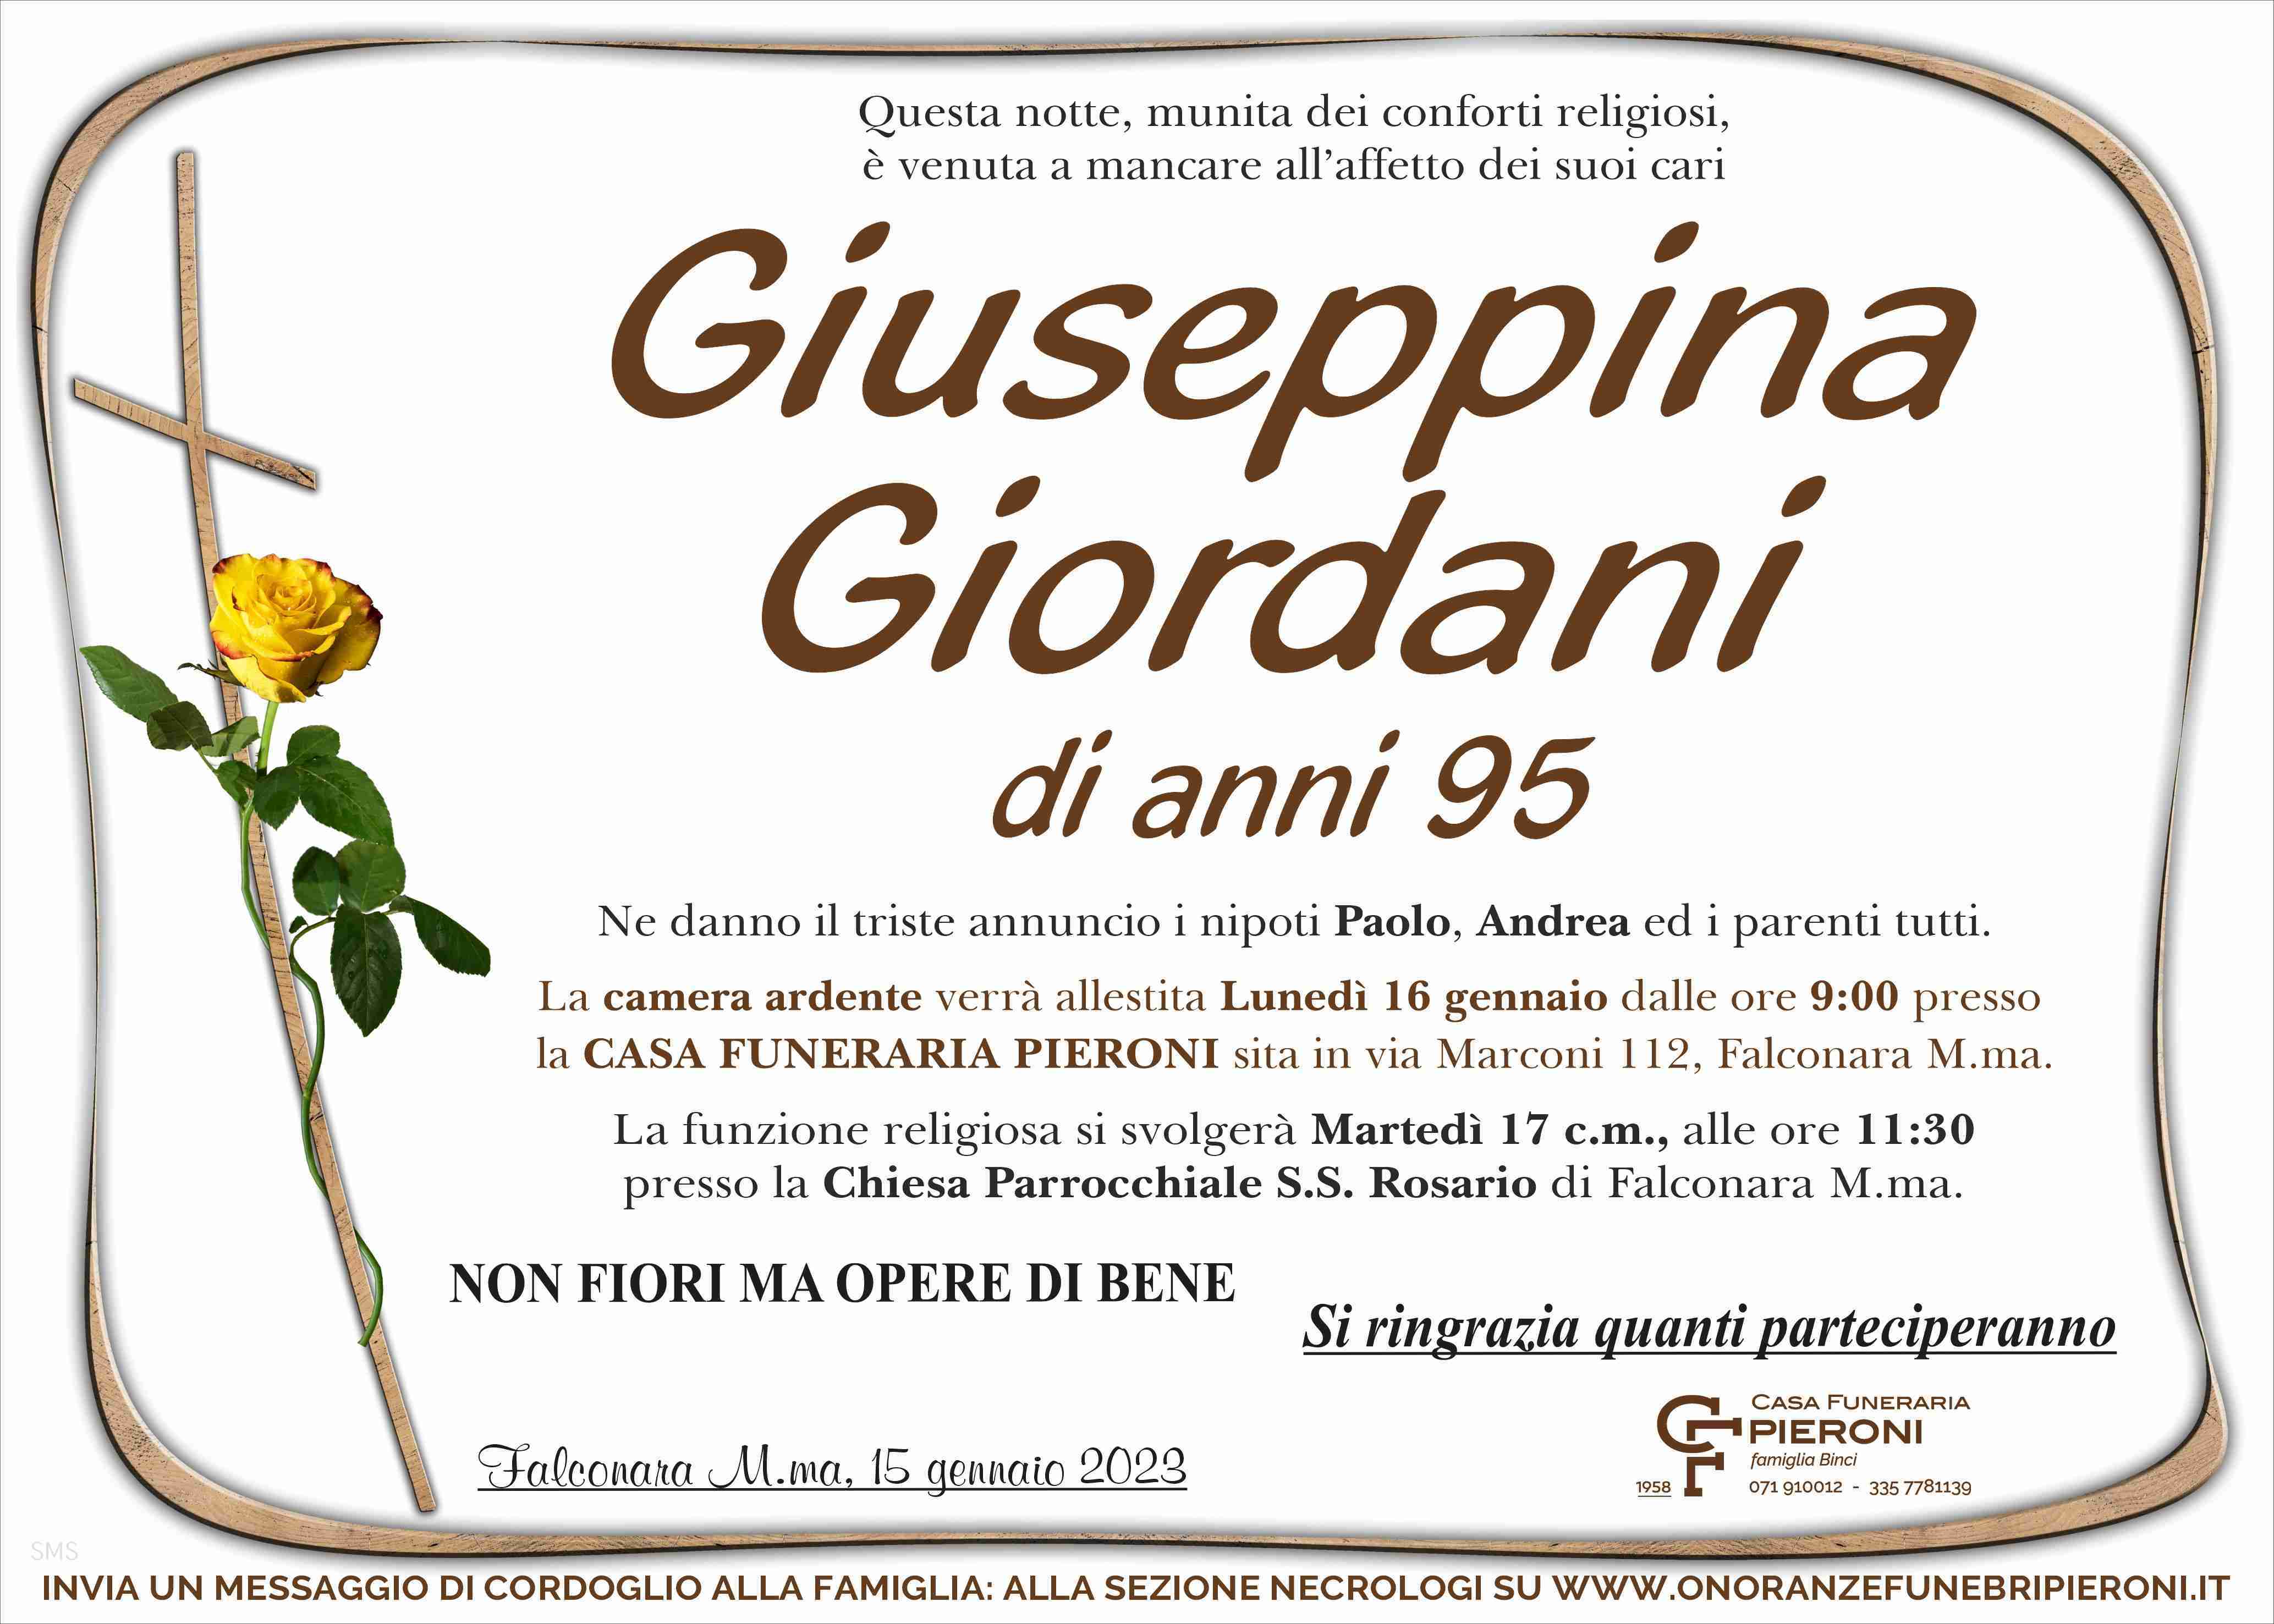 Giuseppina Giordani